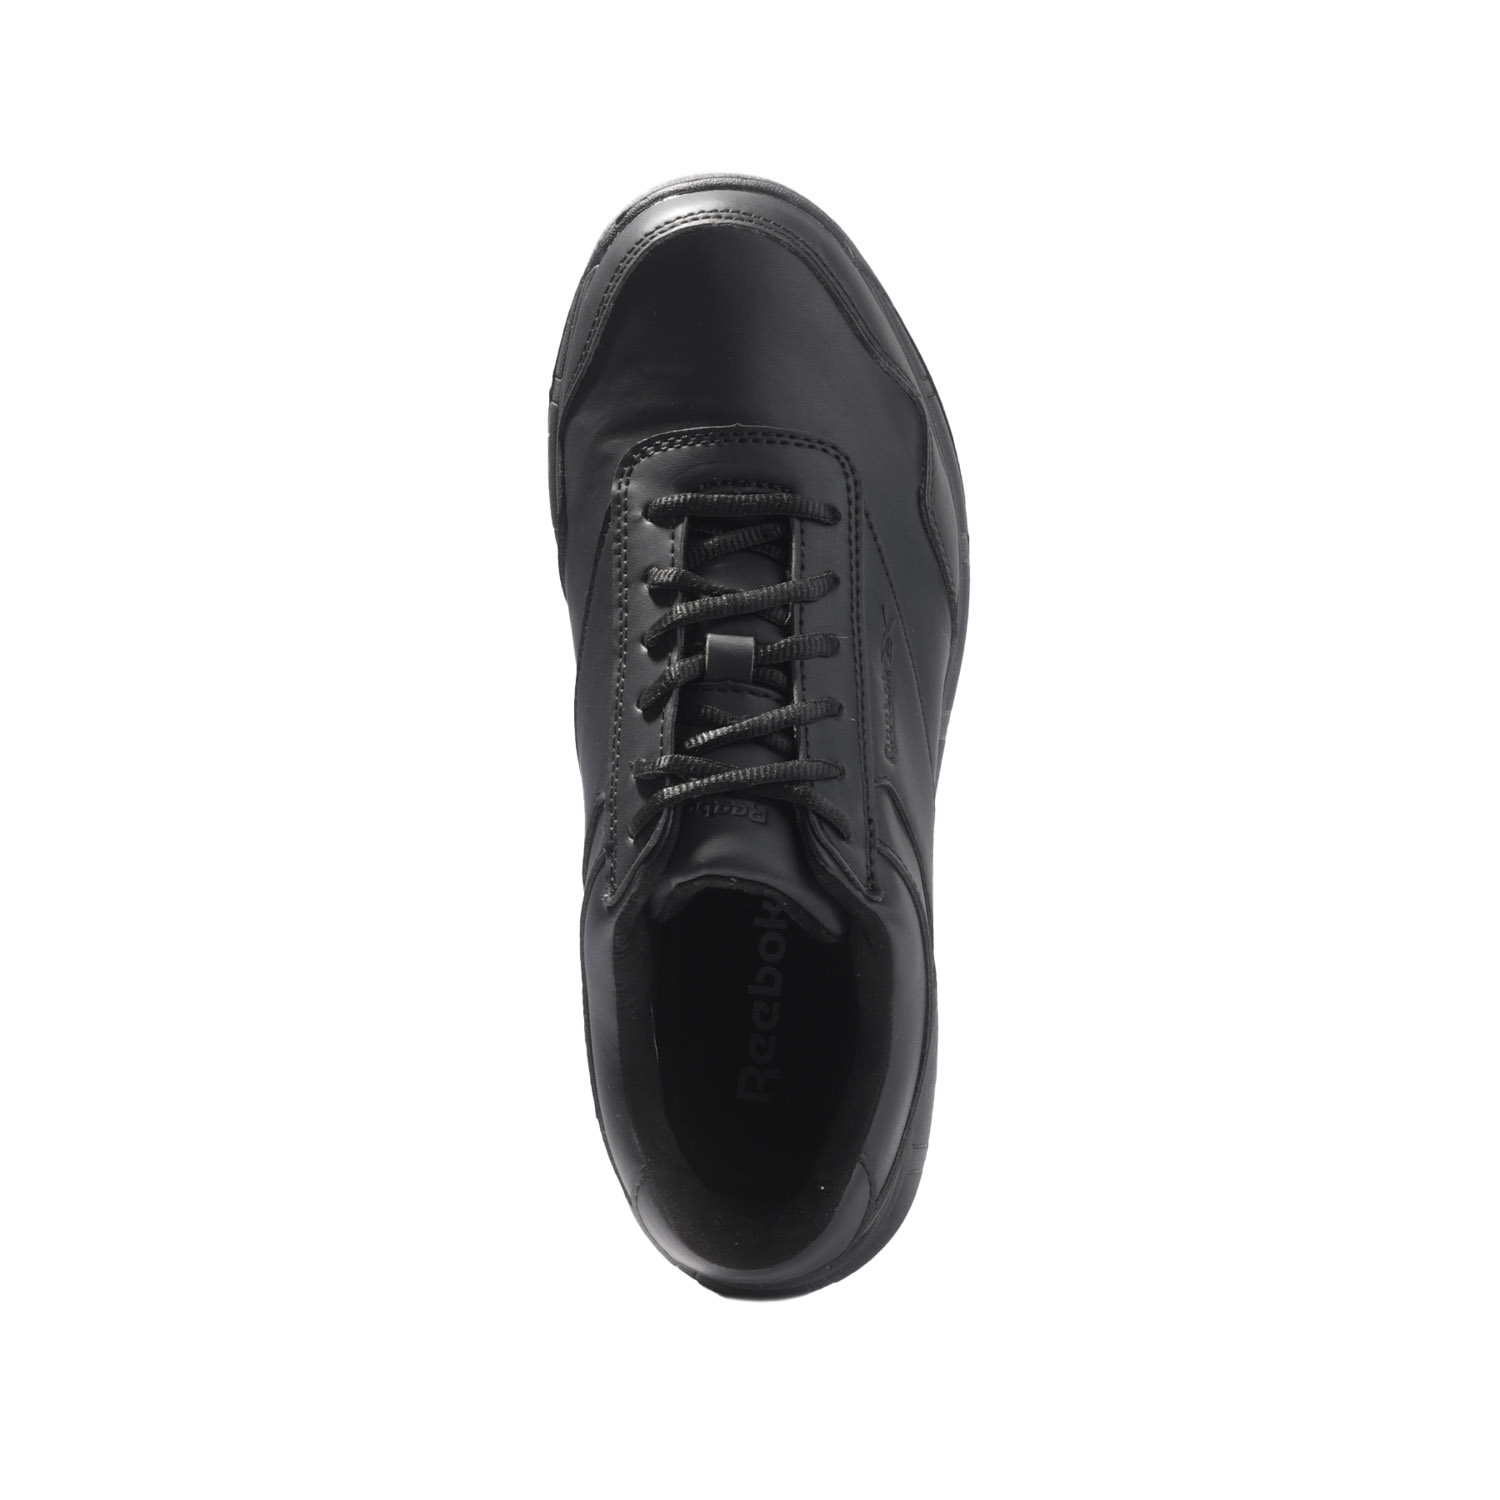 Reebok Women's Jorie LT Athletic Slip Resistant Work Shoes